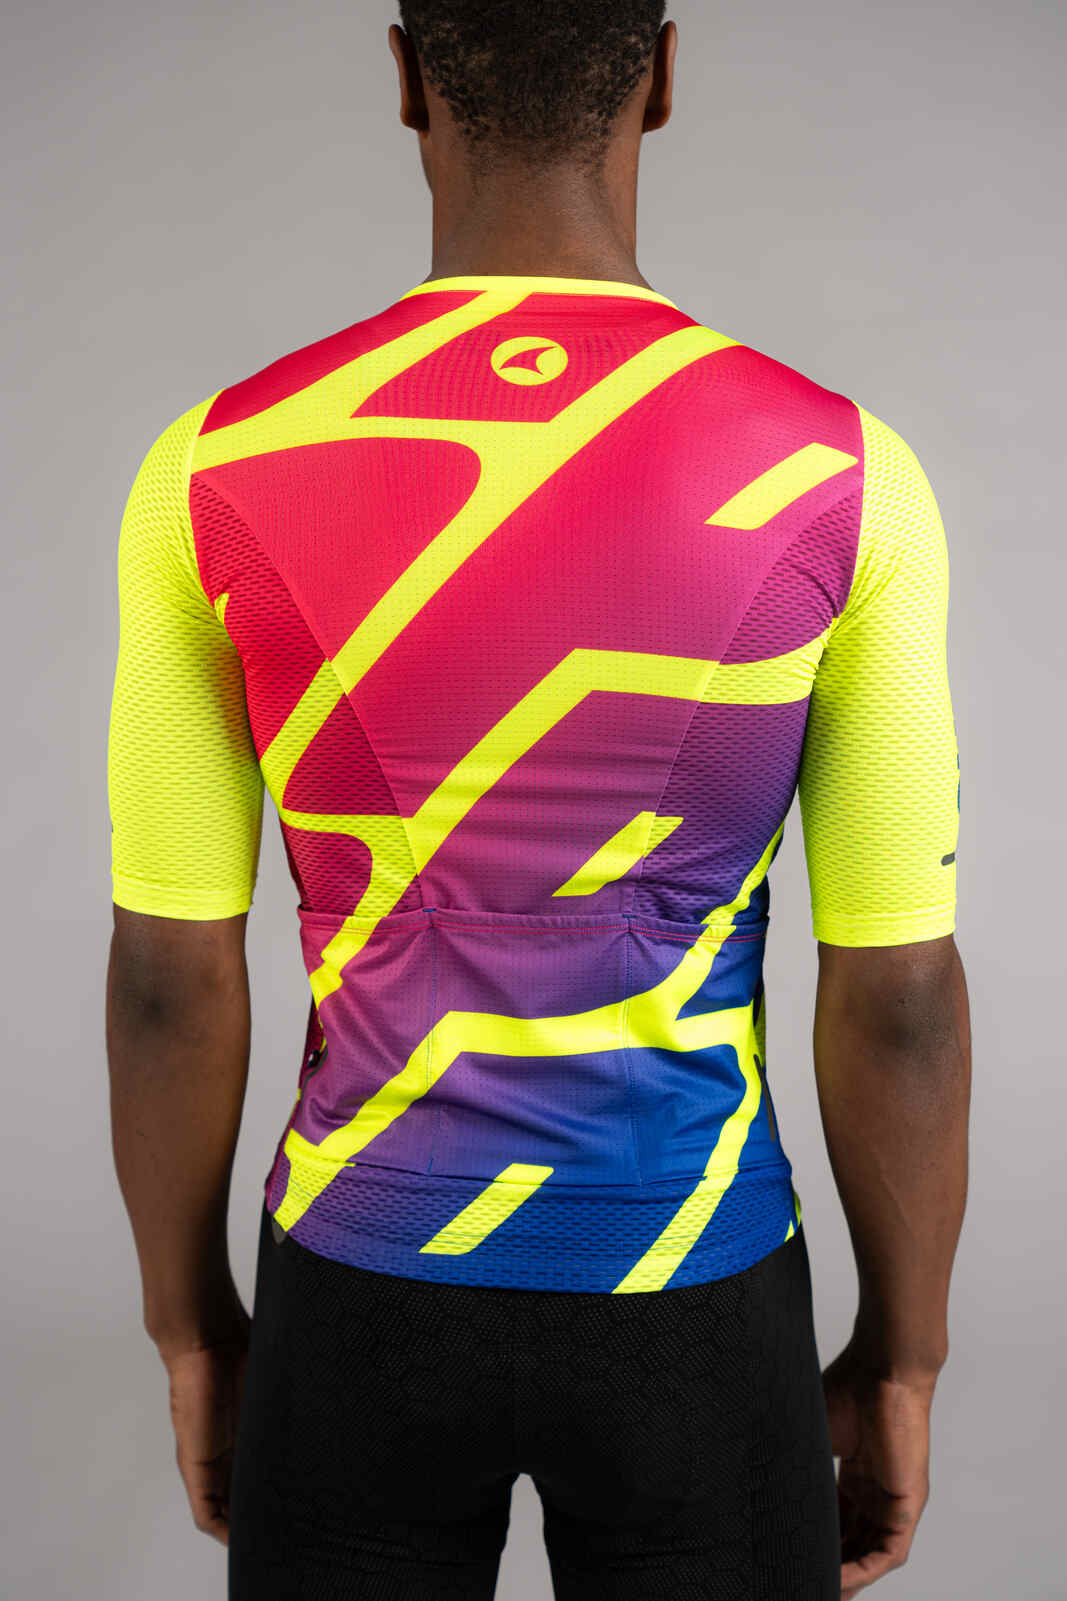 Men's High-Viz Yellow Mesh Cycling Jersey - Back Fabric Close-Up